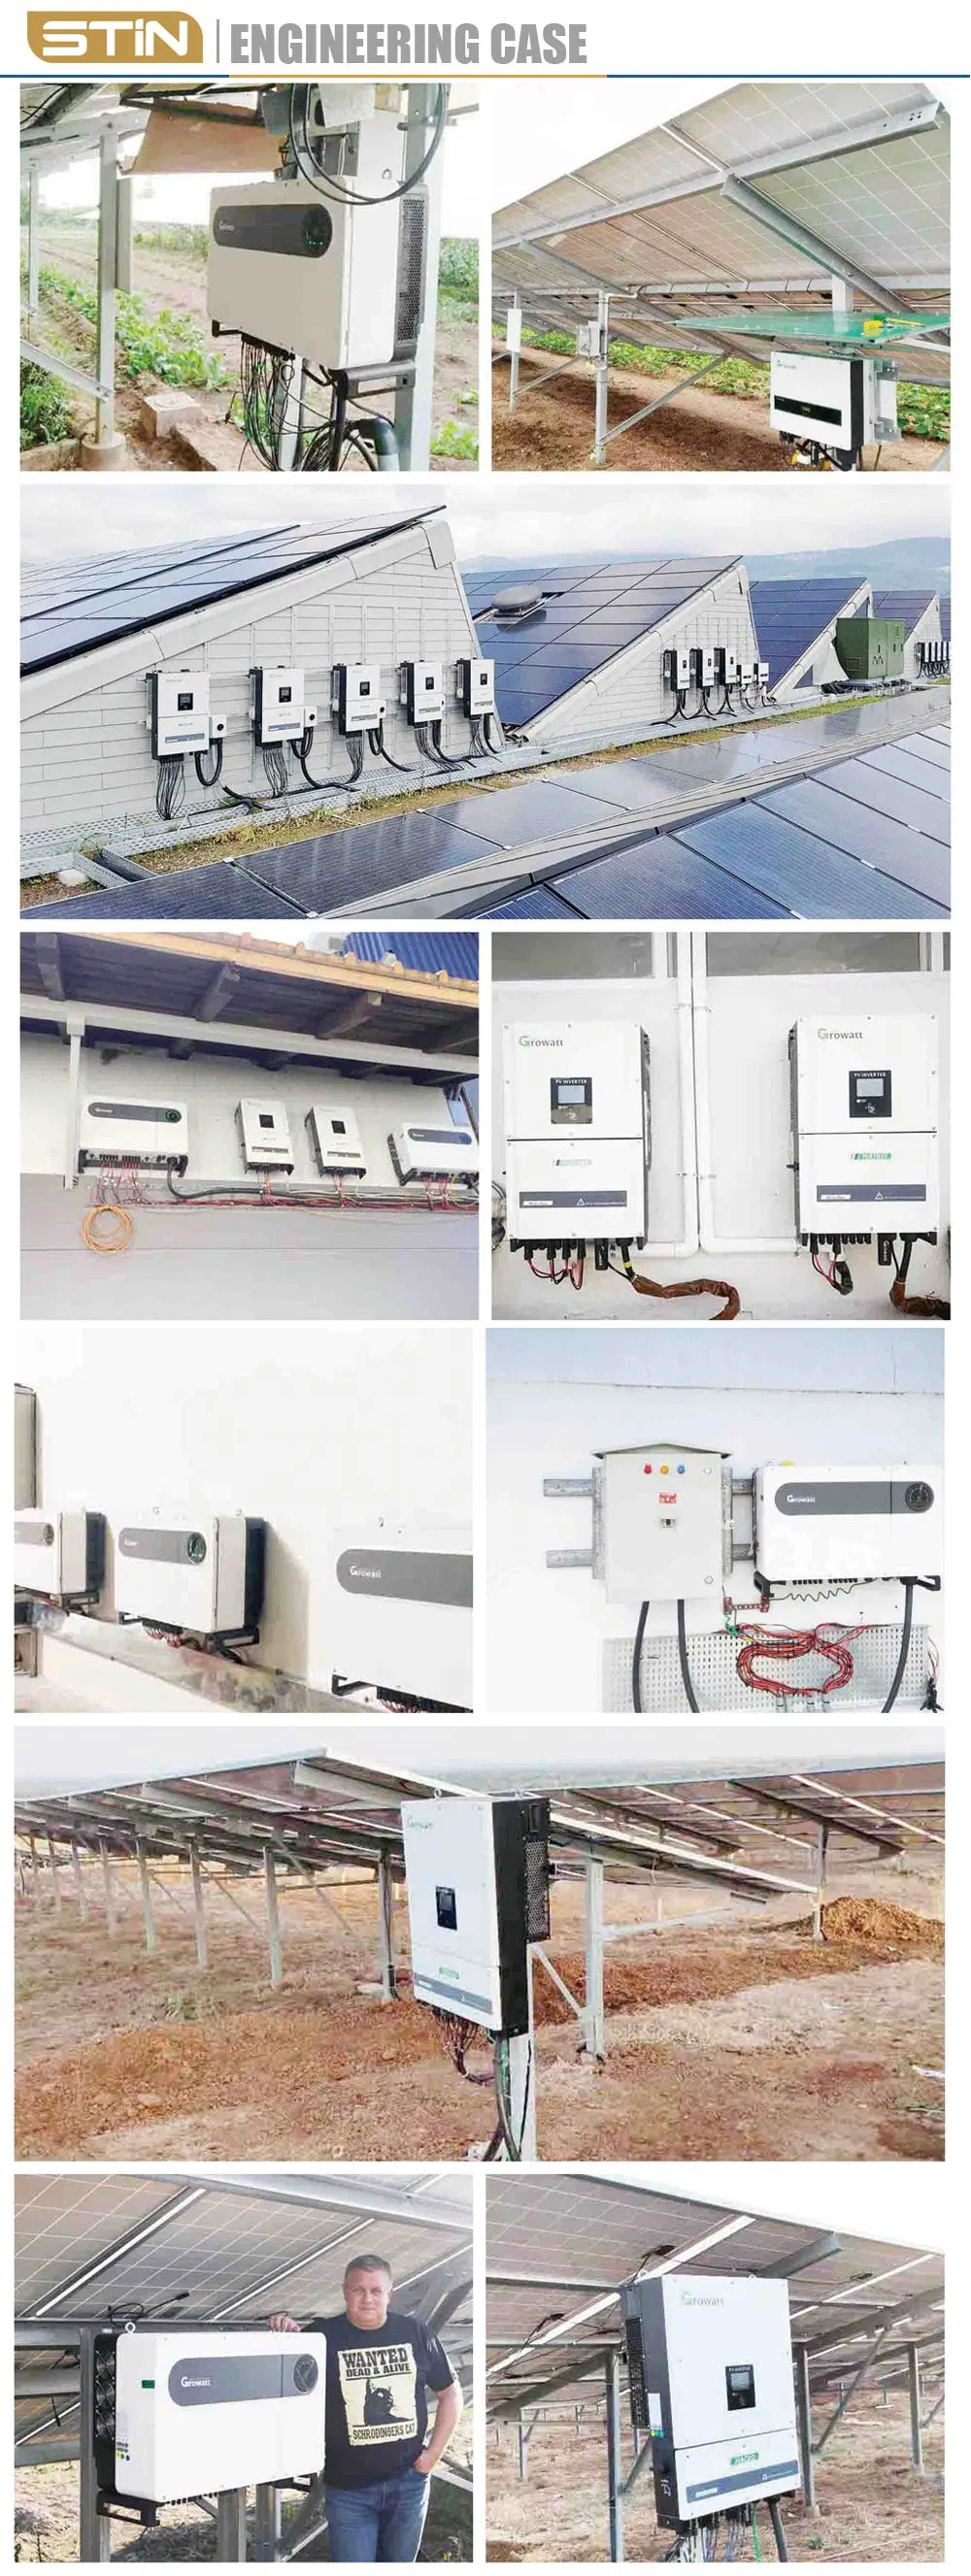 40 Kw 40000W 40K Watt Complete on Grid Hybrid Photovoltaic Solar Energy Generator with Inverter Solar Panel